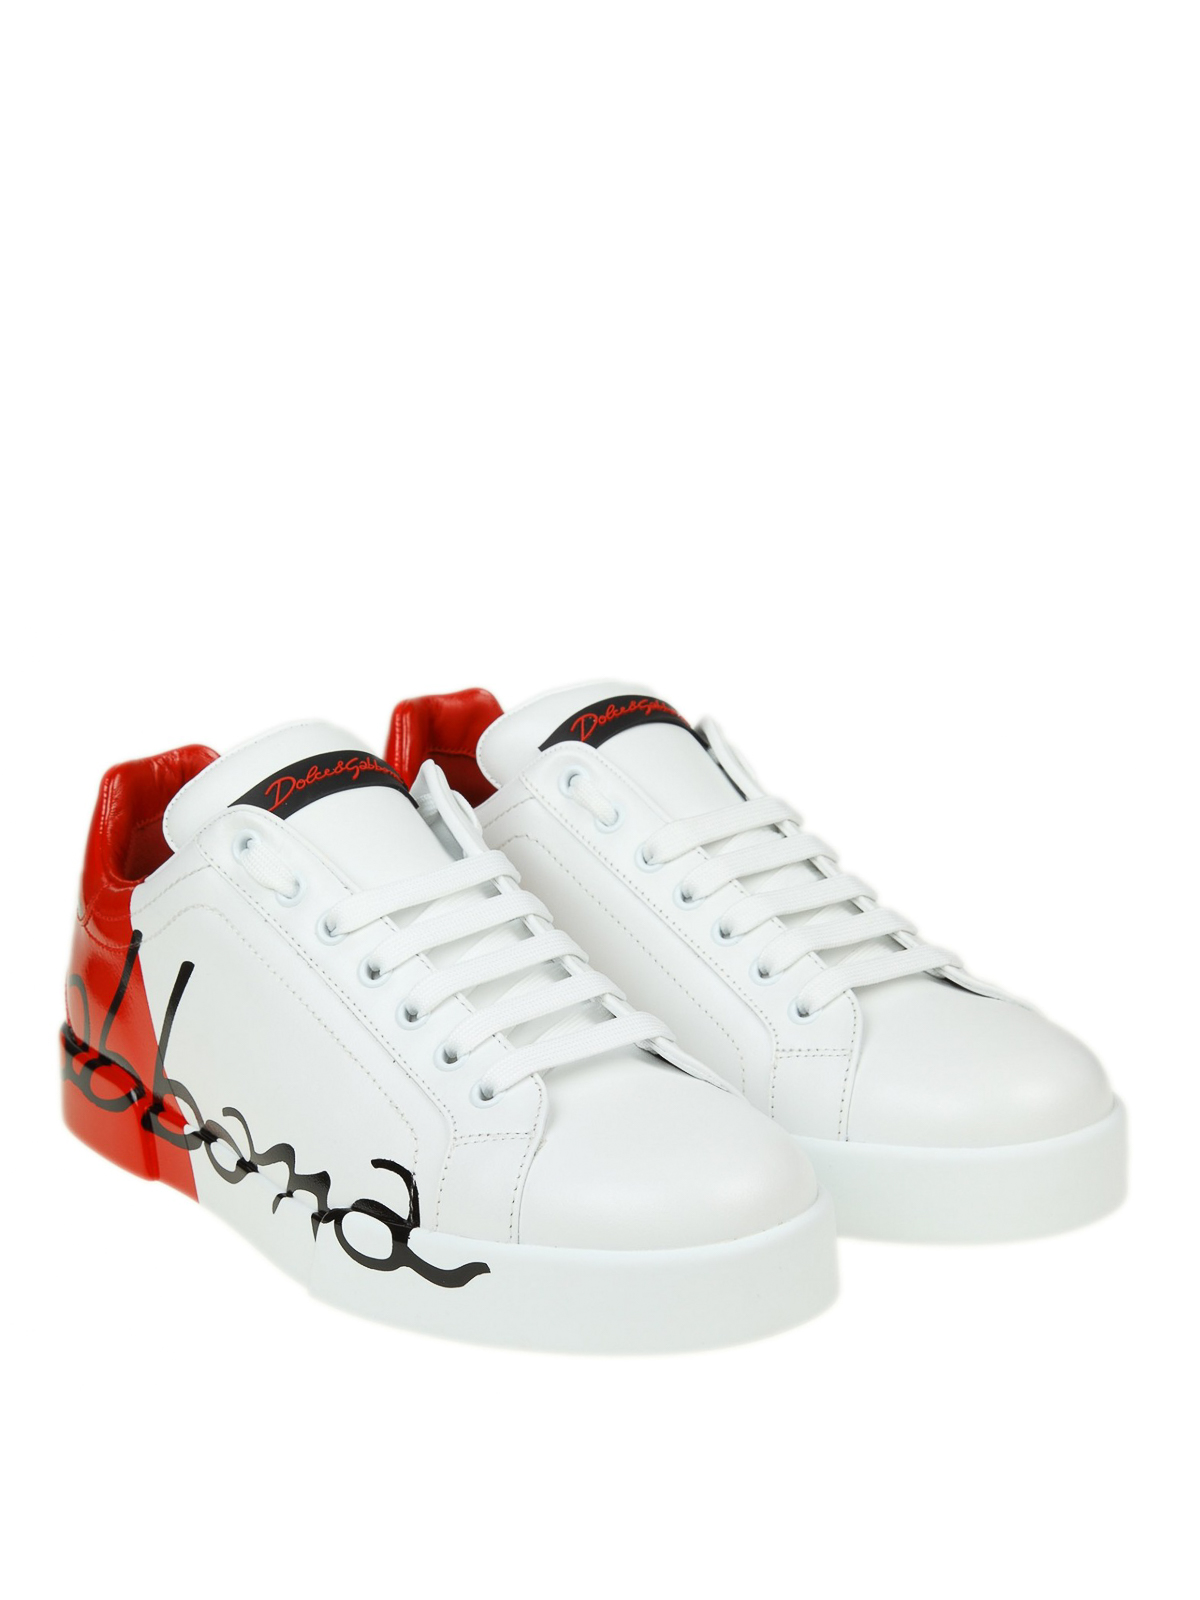 Trainers Dolce & Gabbana - Portofino white and red leather 